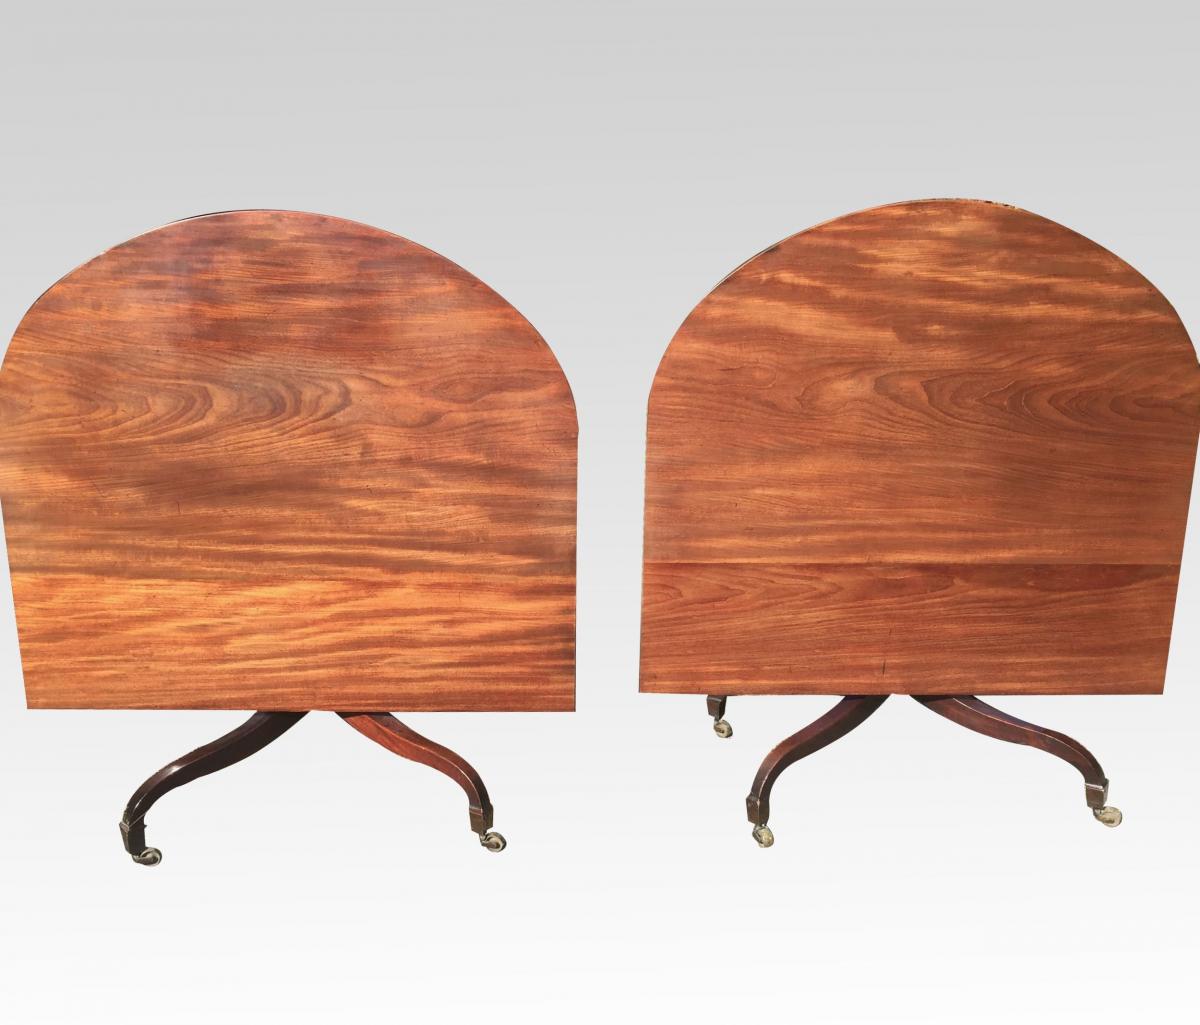 George III mahogany twin pedestal Dining Table